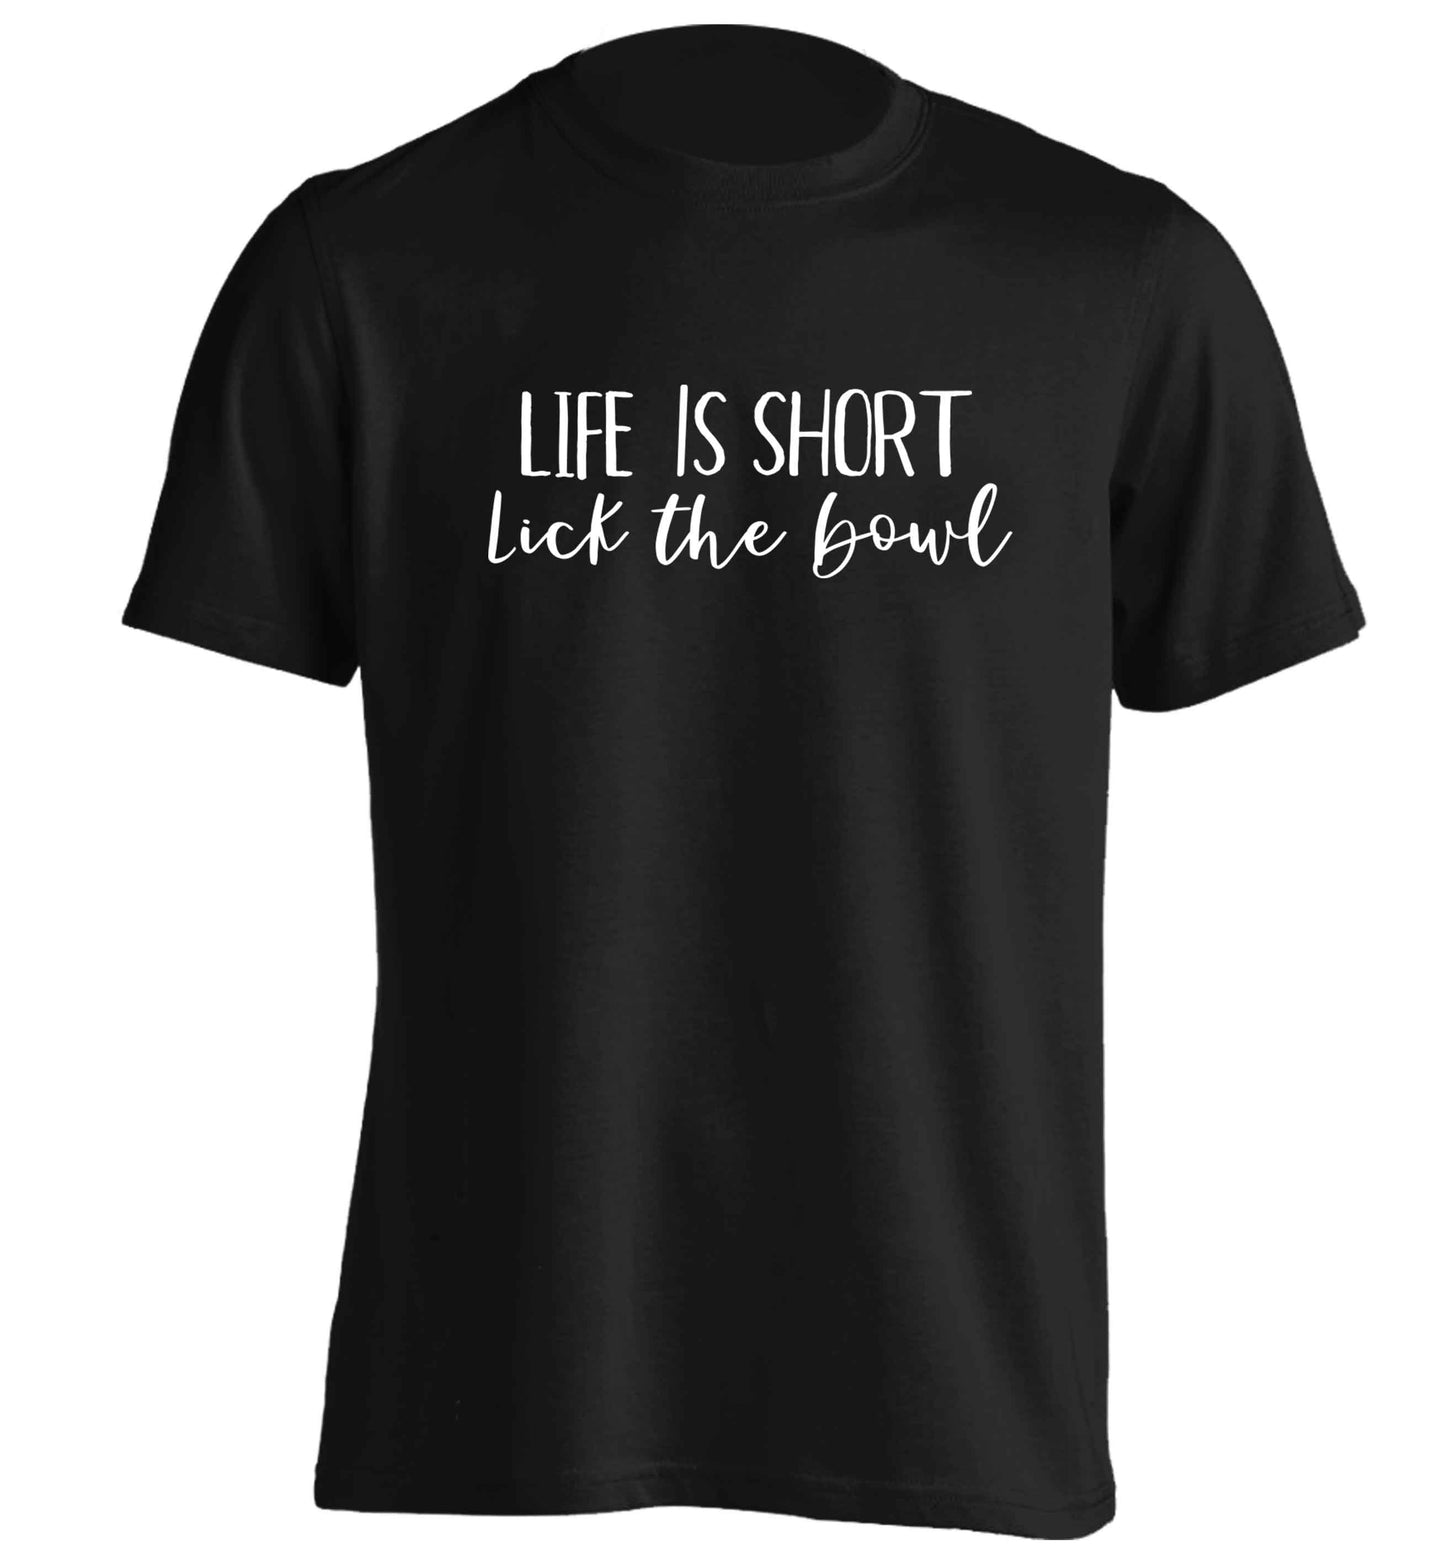 Life is short lick the bowl adults unisex black Tshirt 2XL